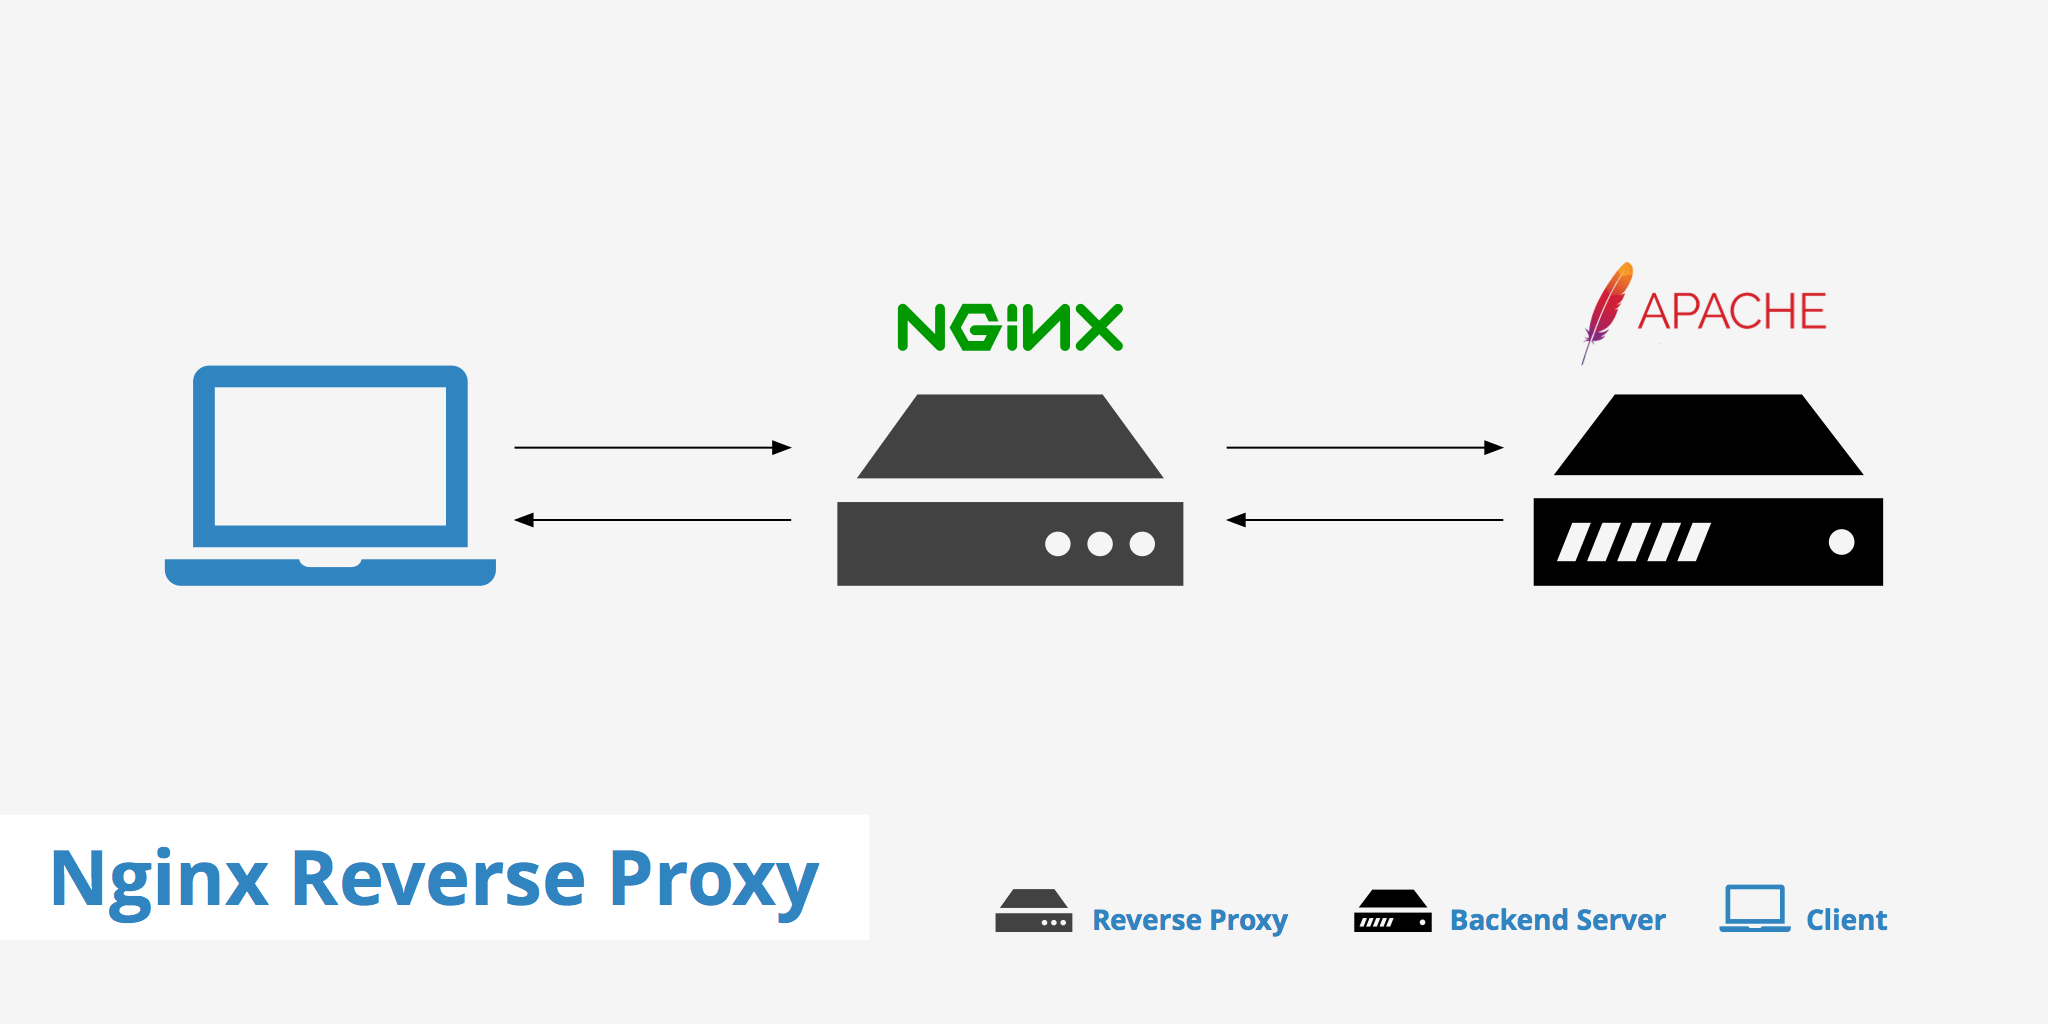 Nginx Logo - Setting up an Nginx Reverse Proxy